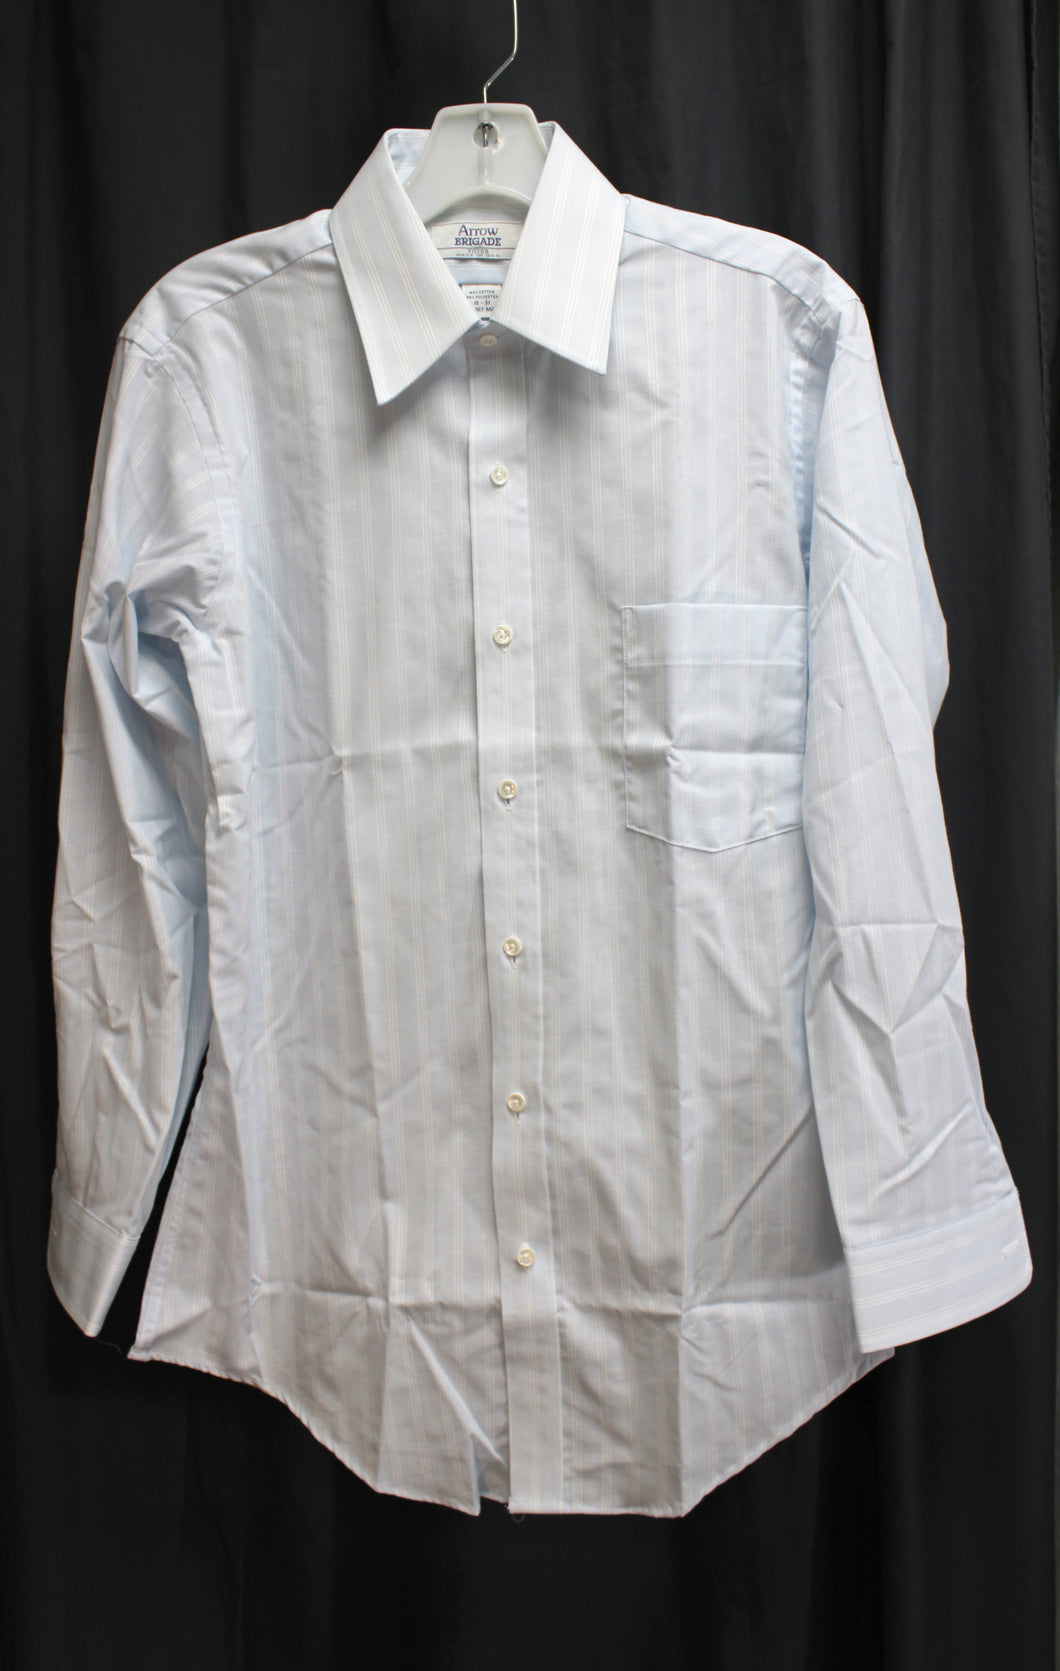 Men's Vintage - Light Blue w/ White Pinstripe Button Up Shirt - Size 15-30 SHORT